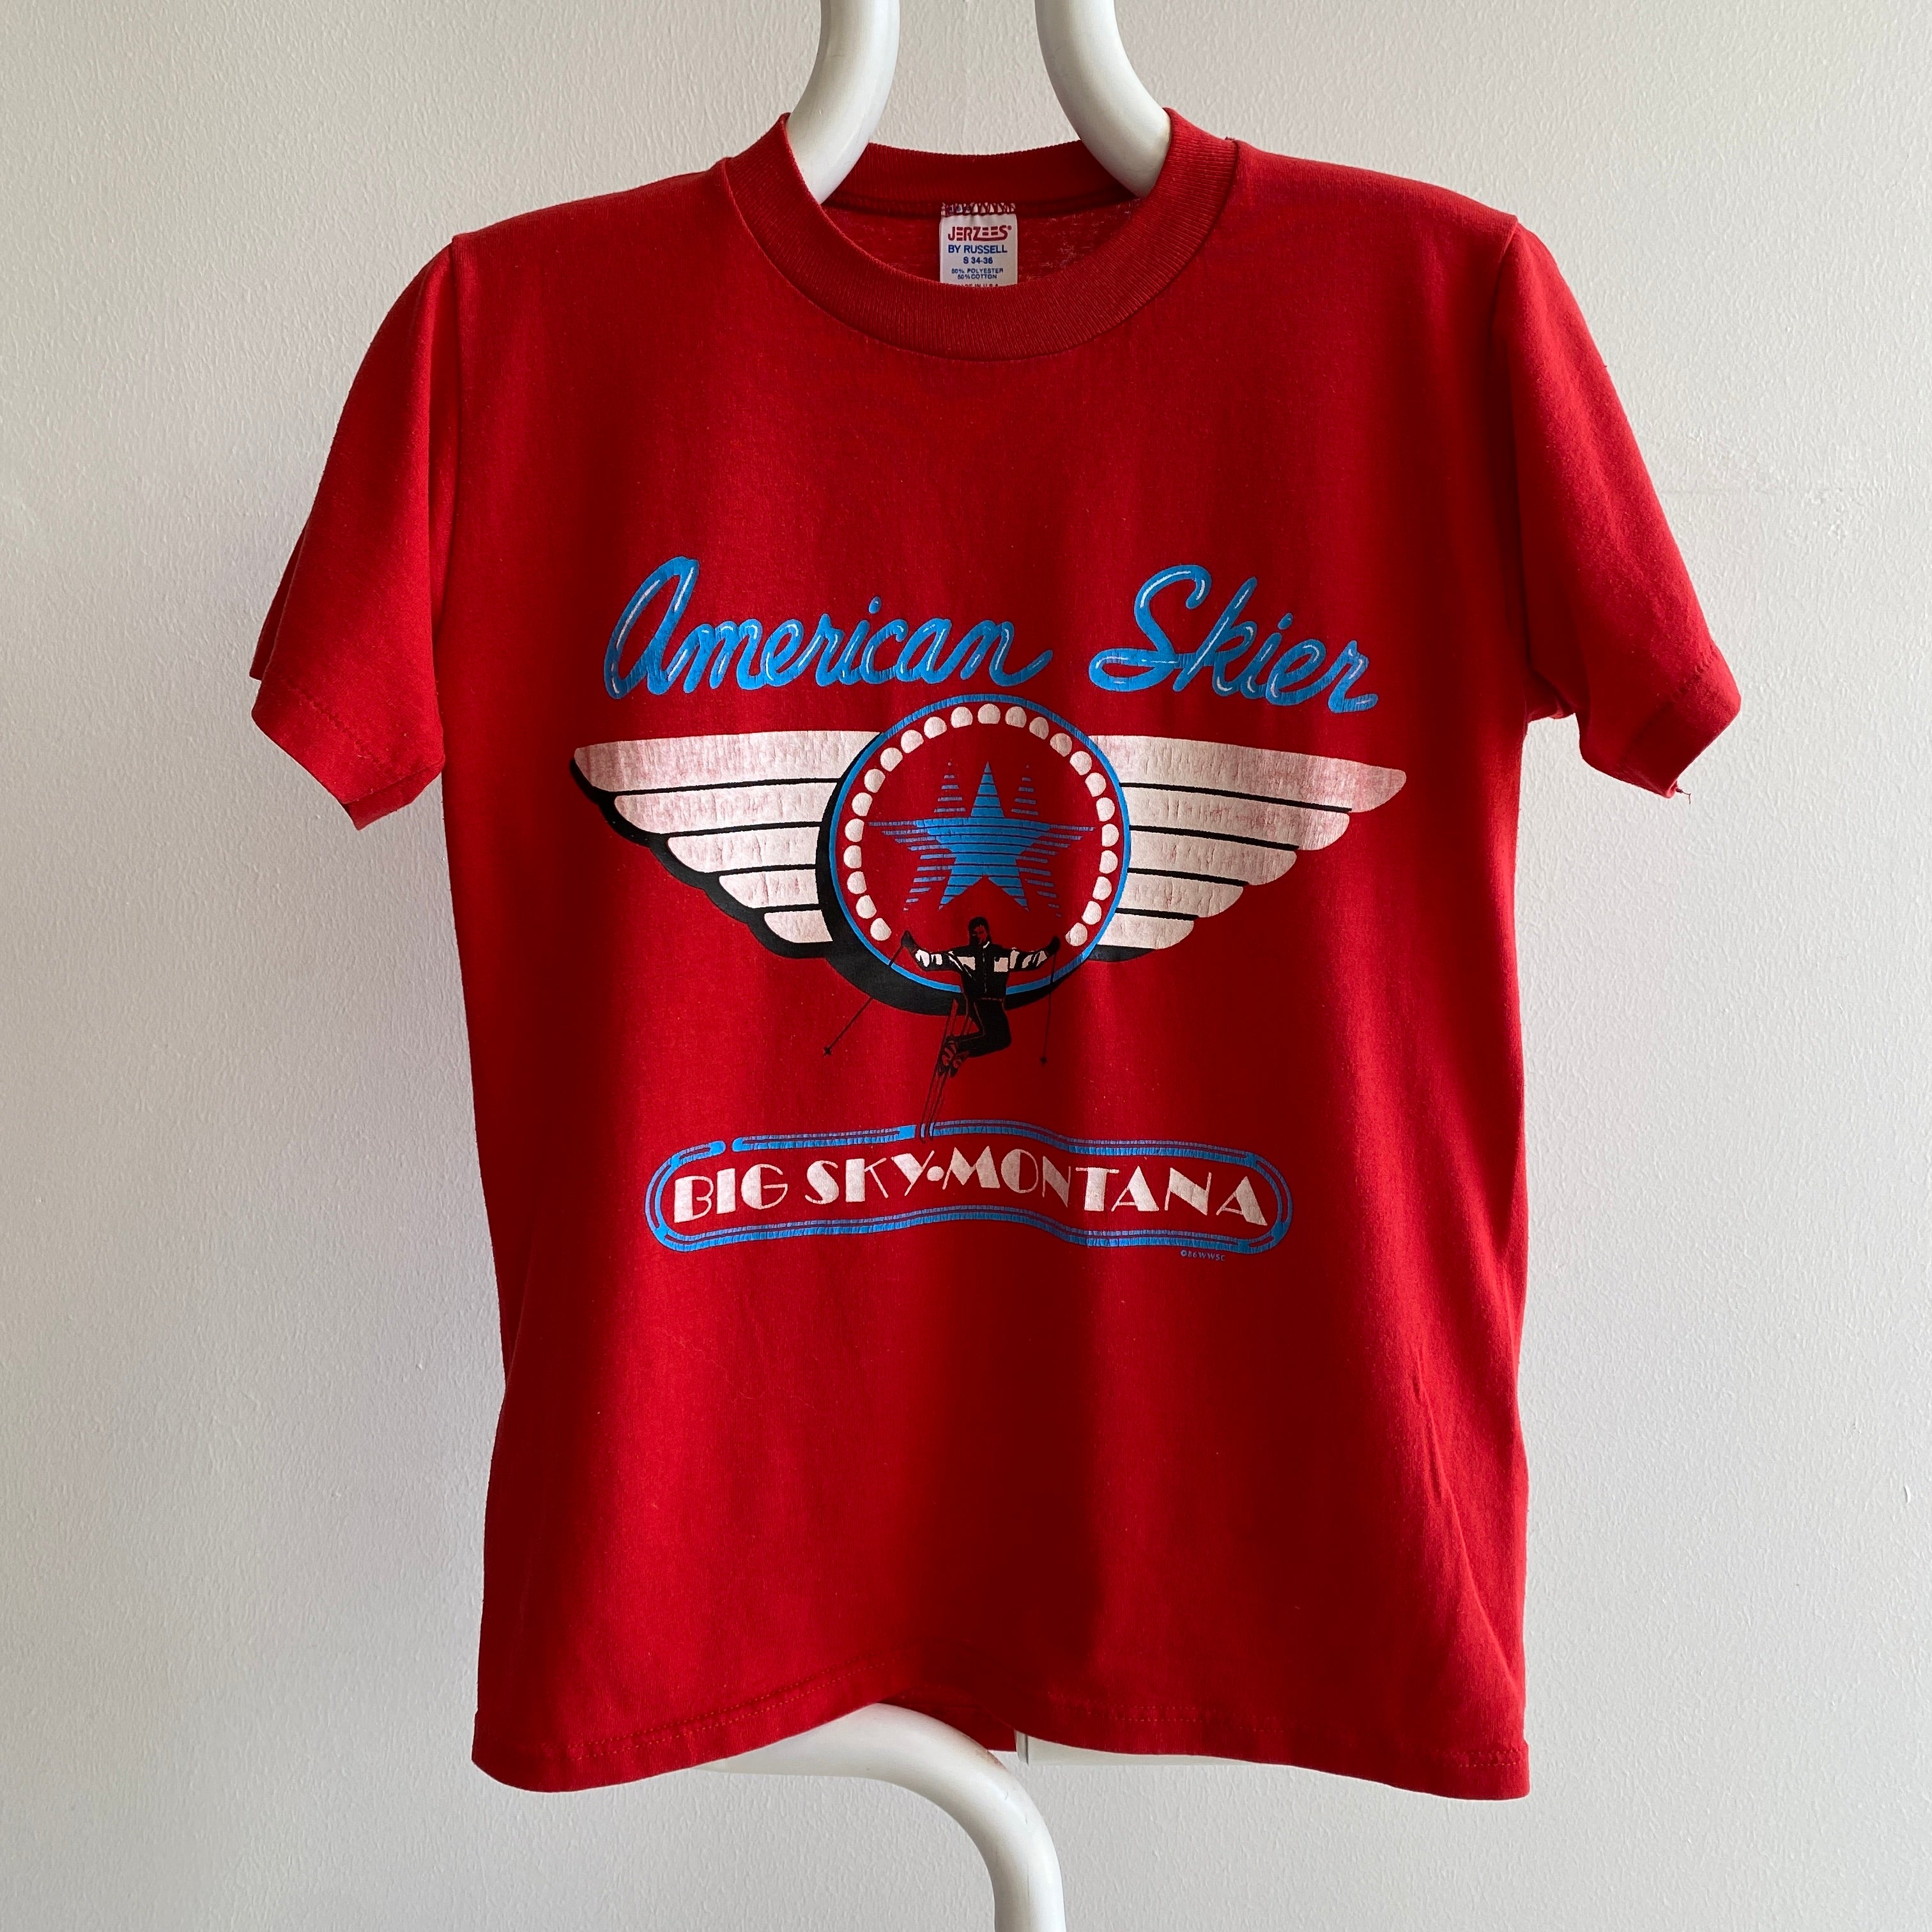 1986 Big Sky Montana Tourist Sky T-Shirt by Jerzees/Russell